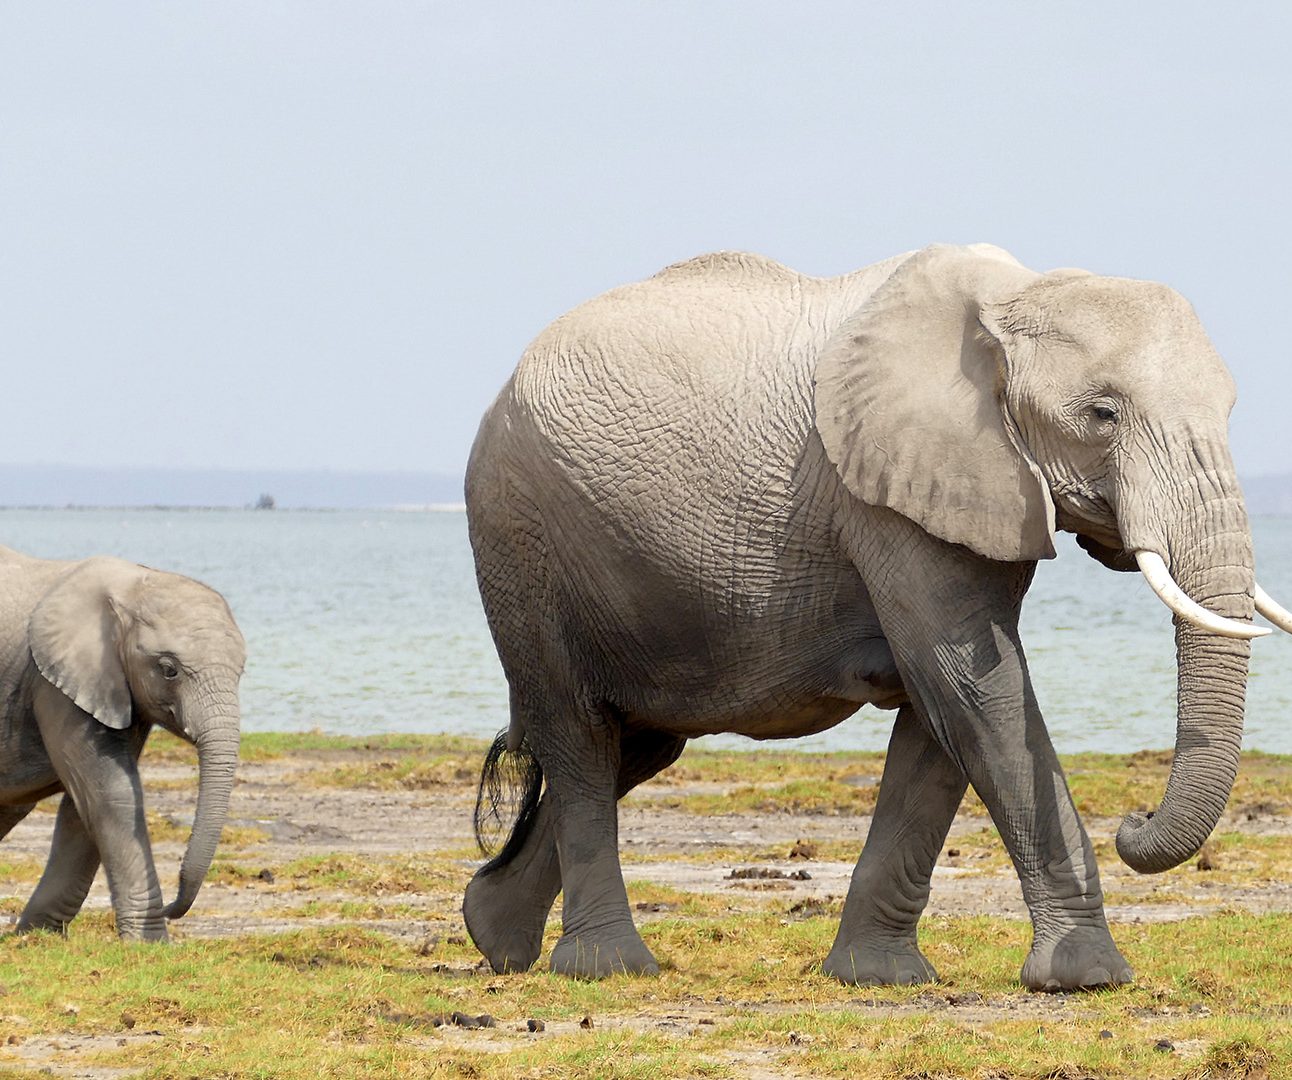 An adult elephant walks across a savannah landscape followed by a baby elephant